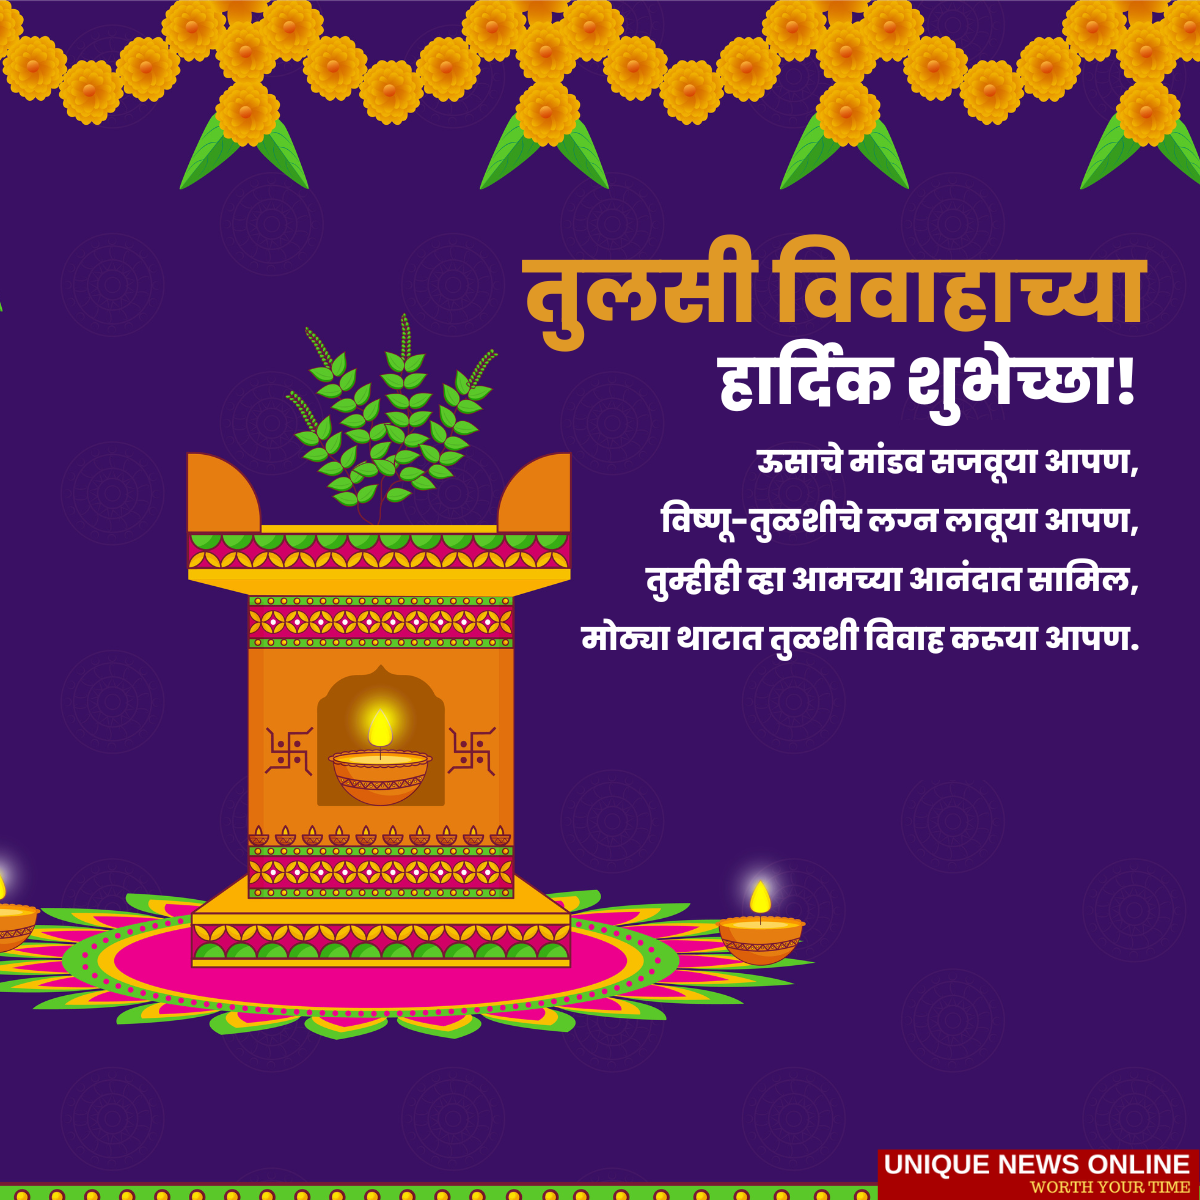 Happy Tulsi Vivah 2022 Marathi Shayari, Messages Slogans, Quotes, Greetings, and Images